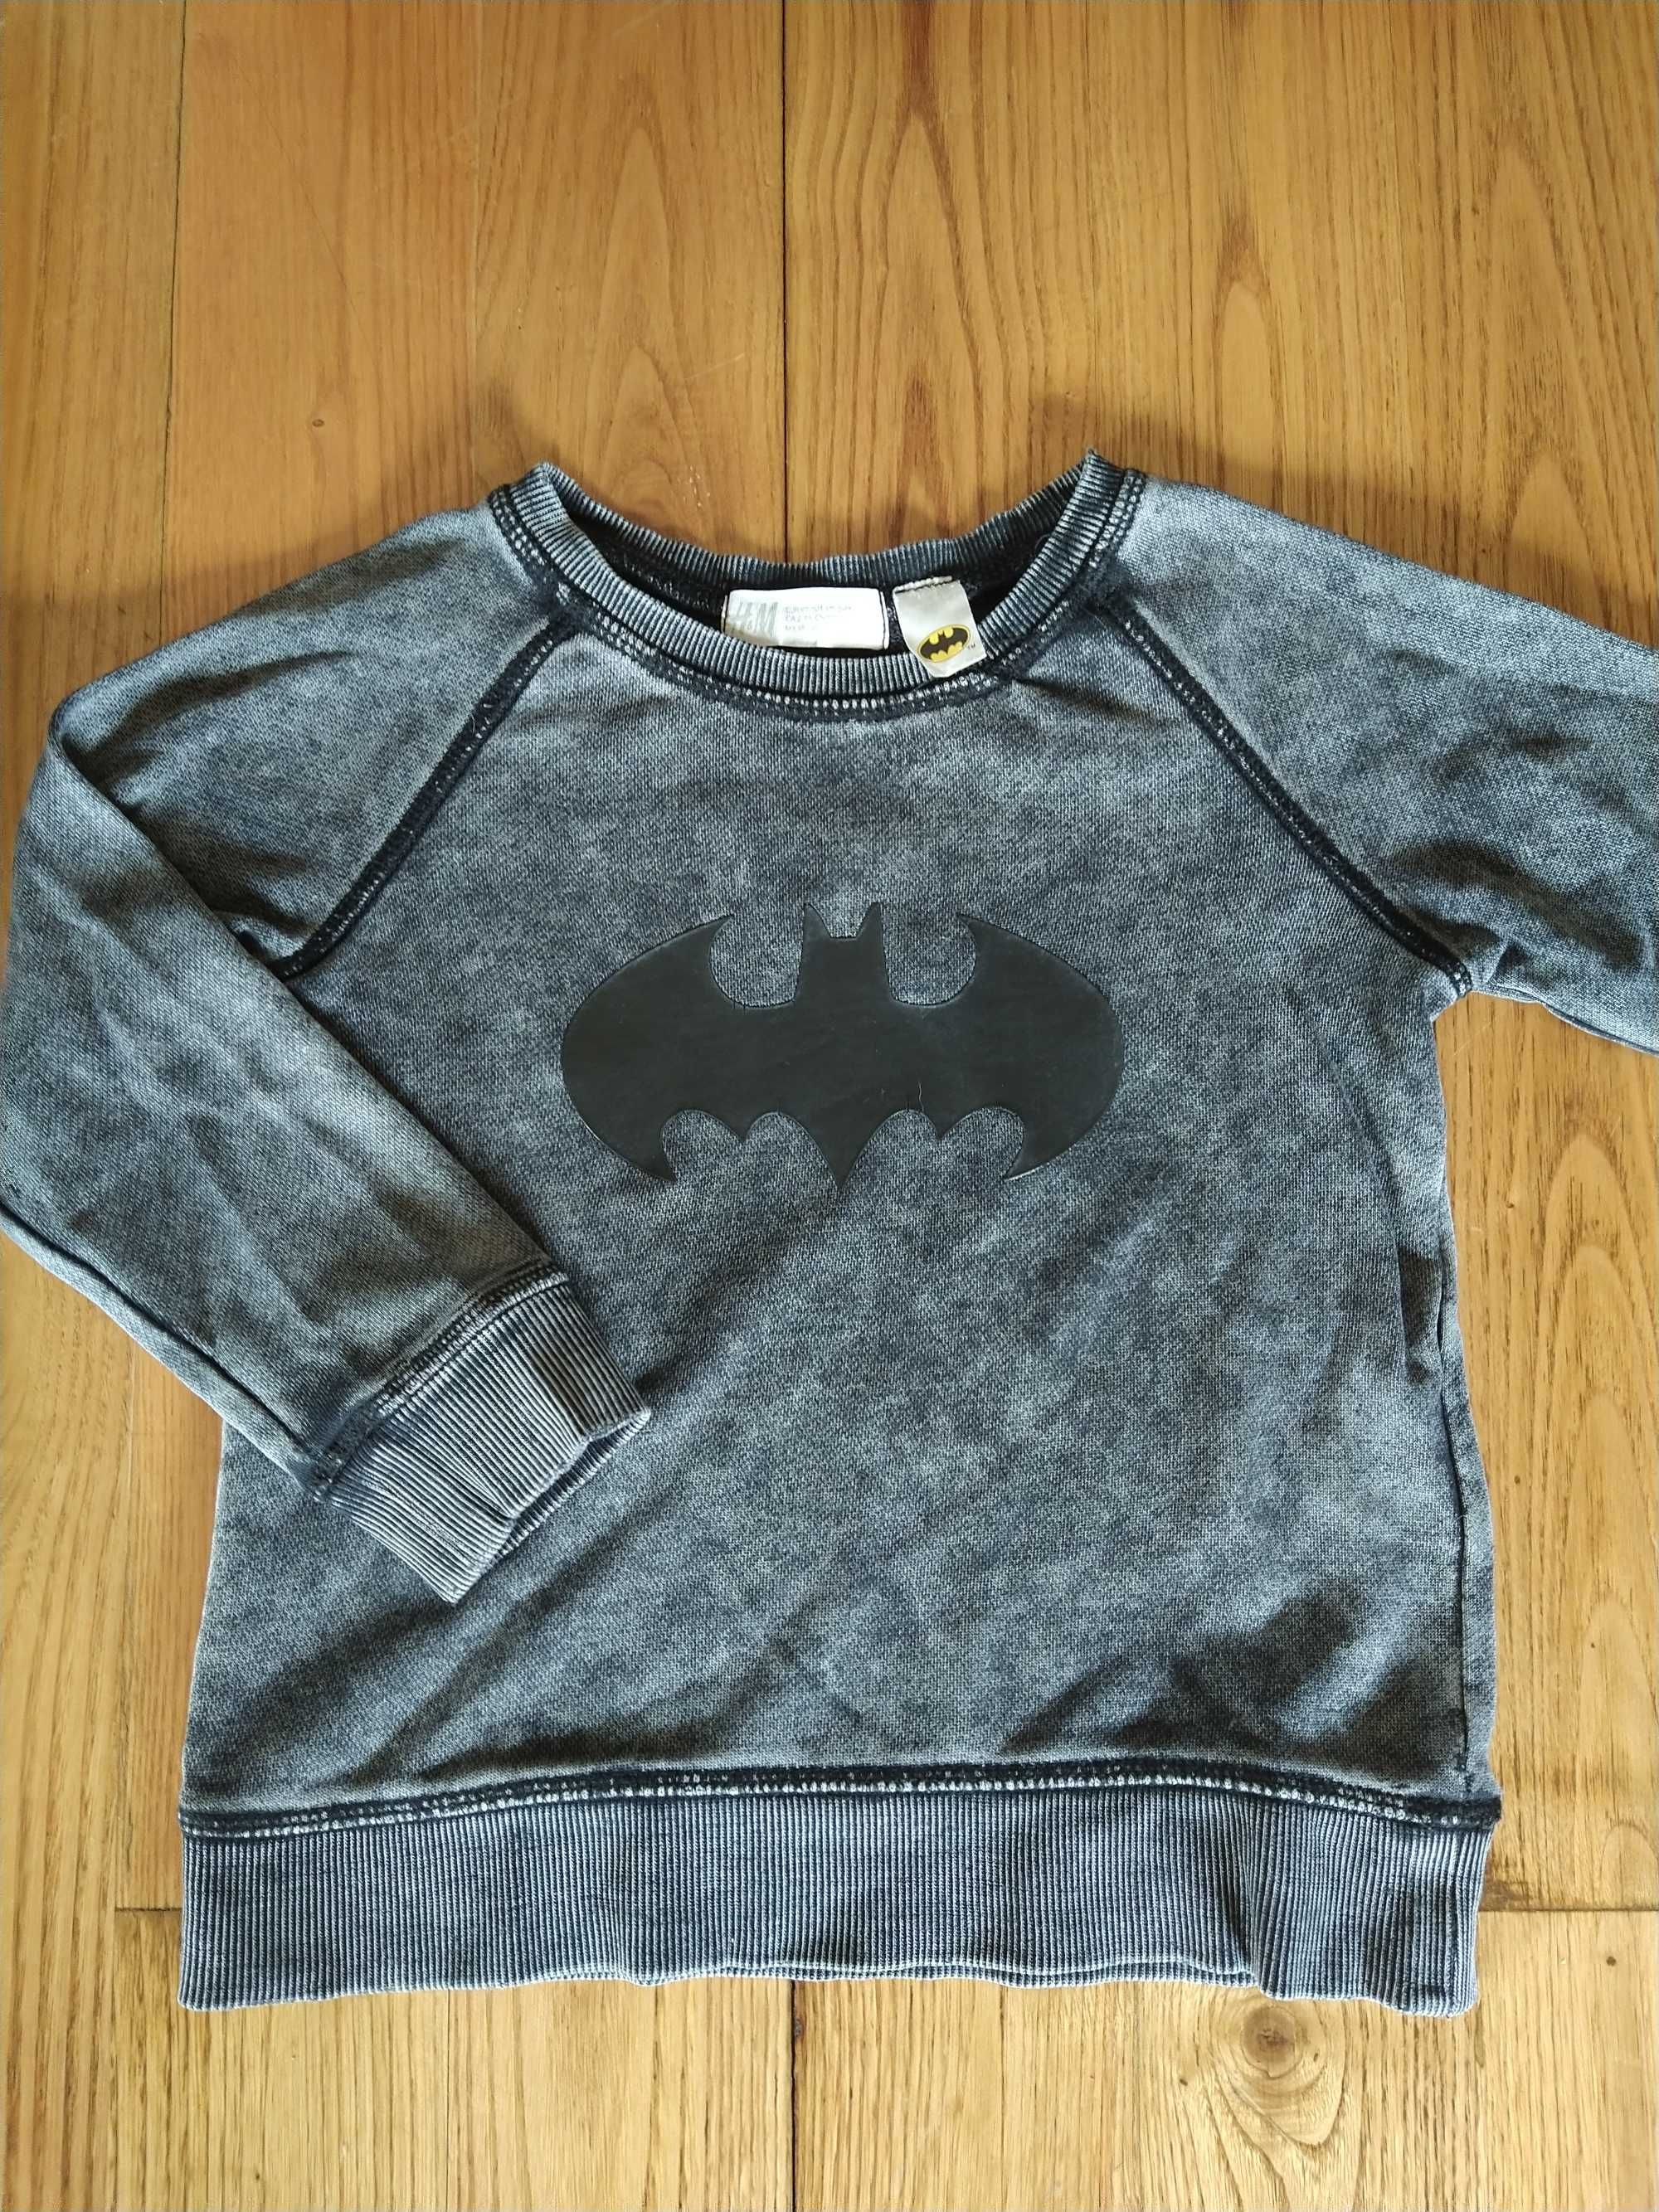 Sweatshirt Batman